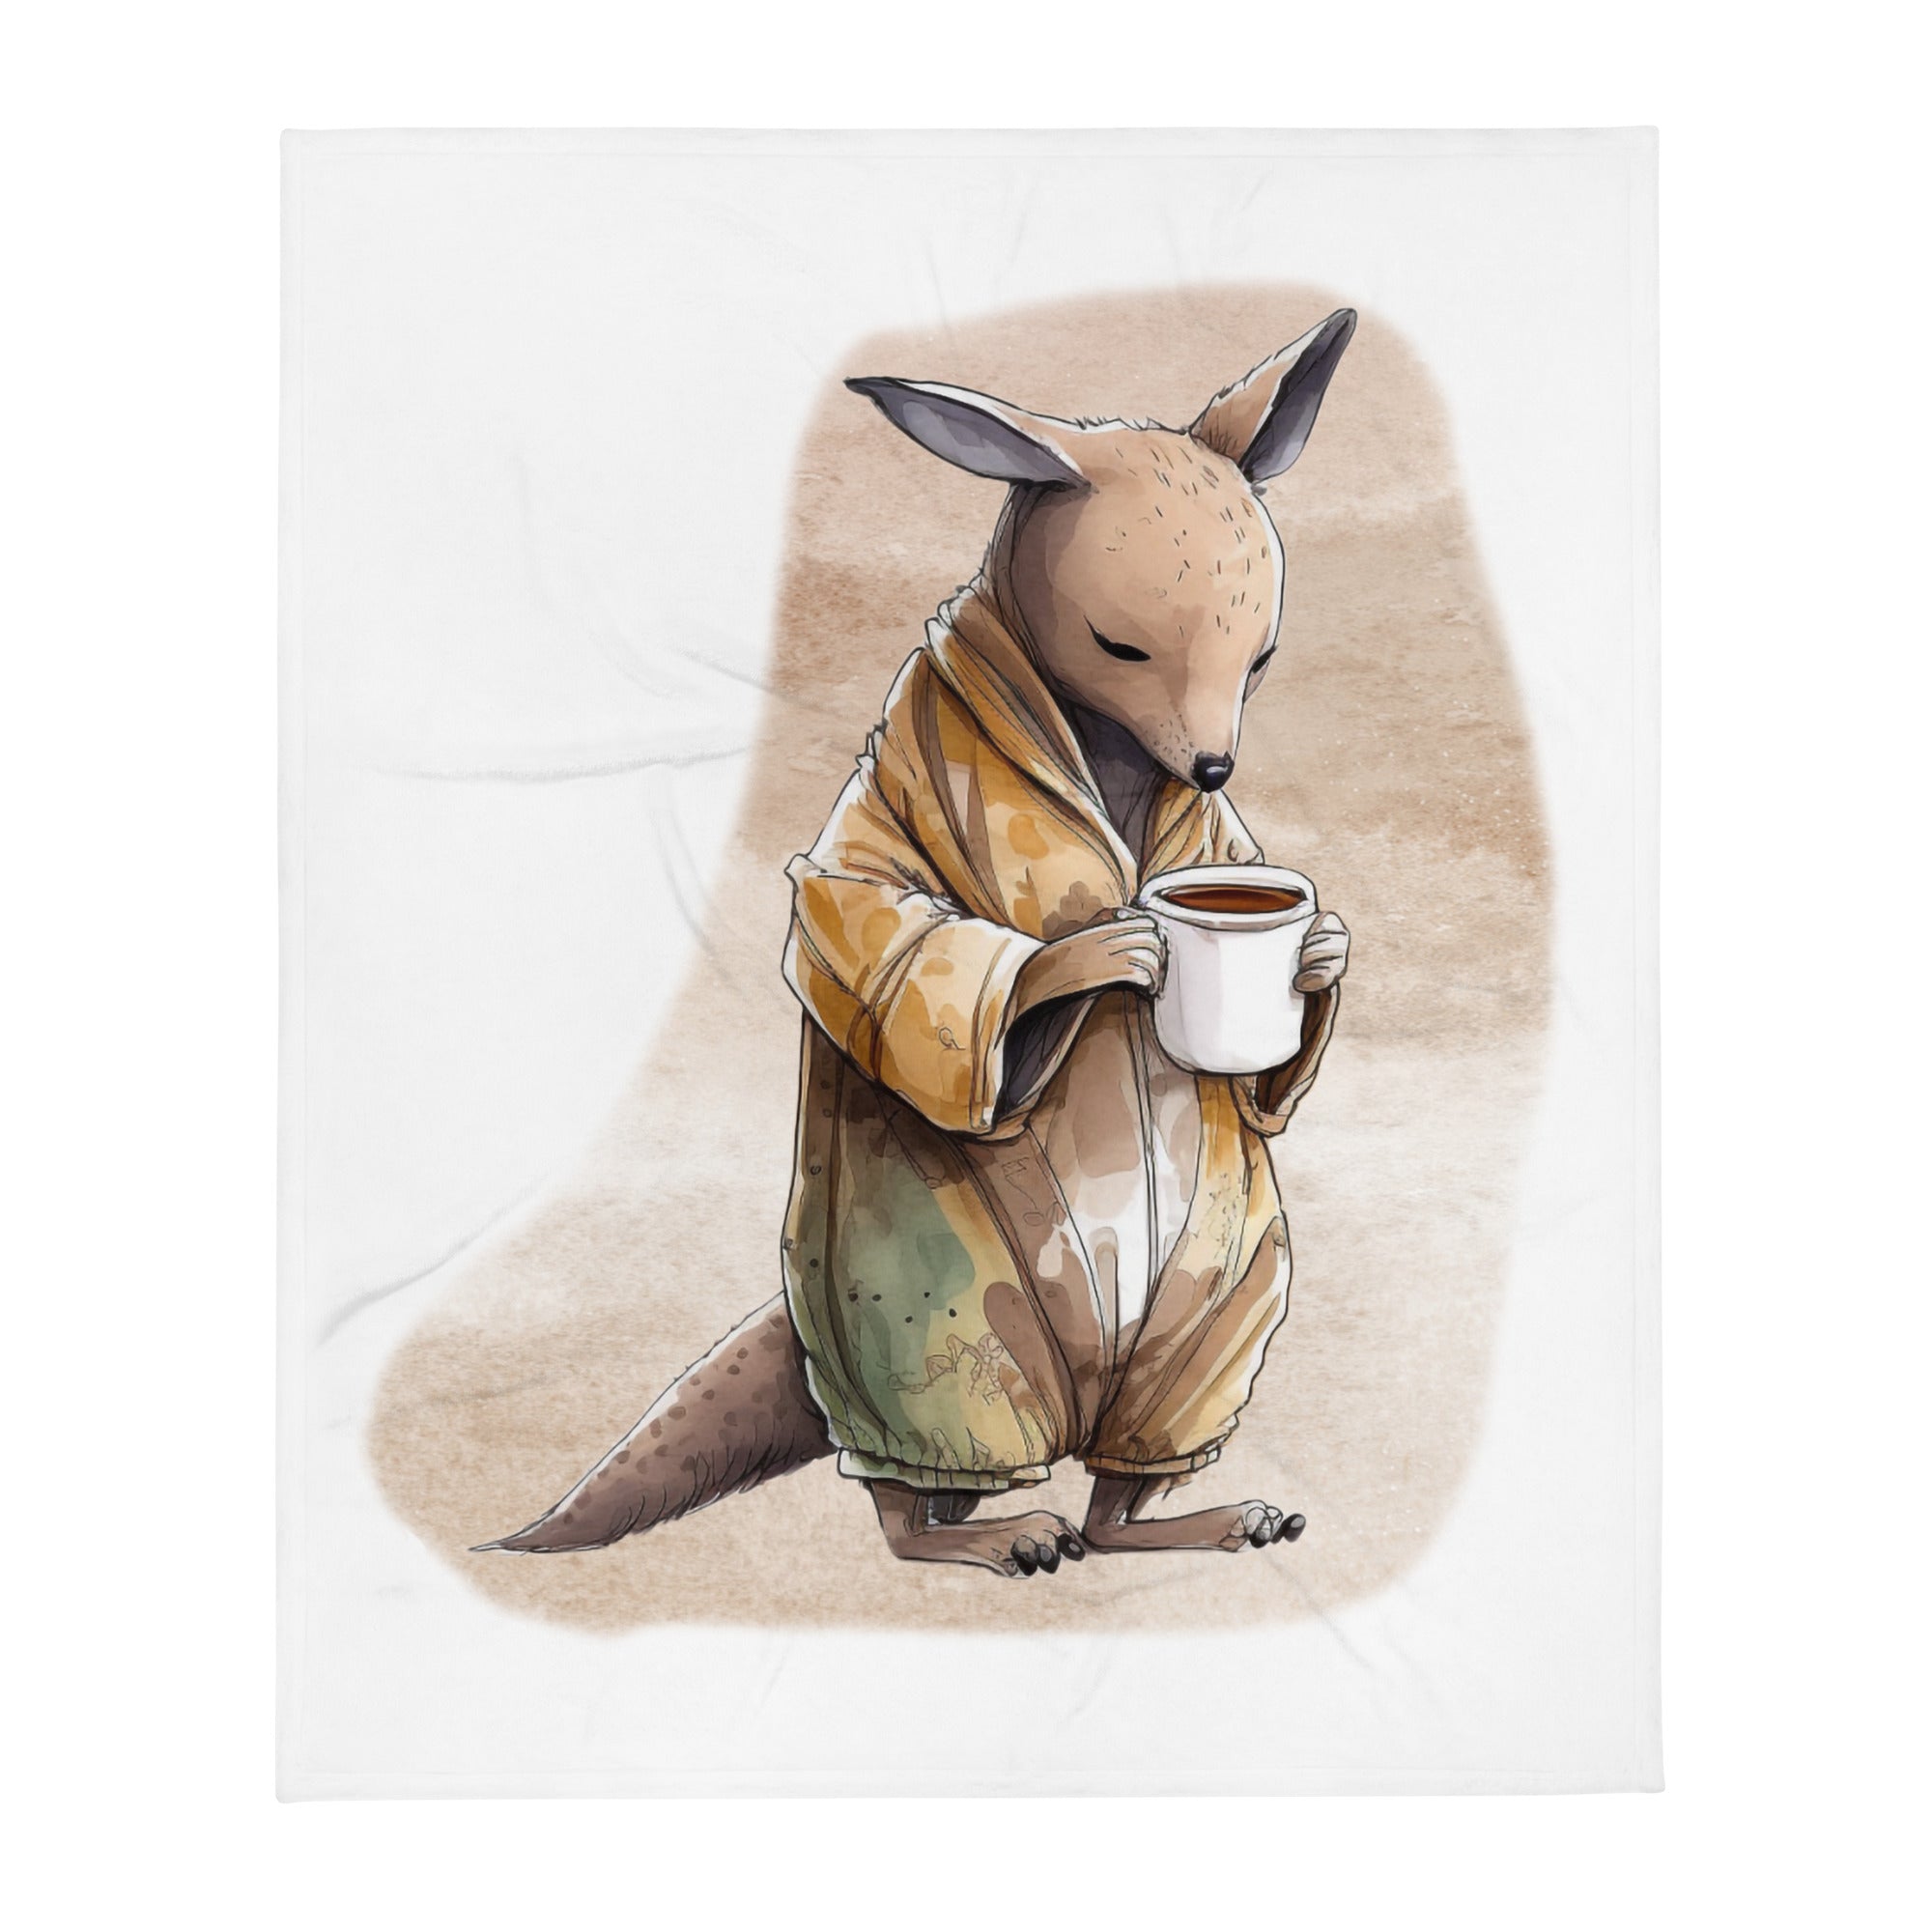 Sleepy Kangaroo 100% Polyester Soft Silk Touch Fabric Throw Blanket - Cozy, Durable and Adorable